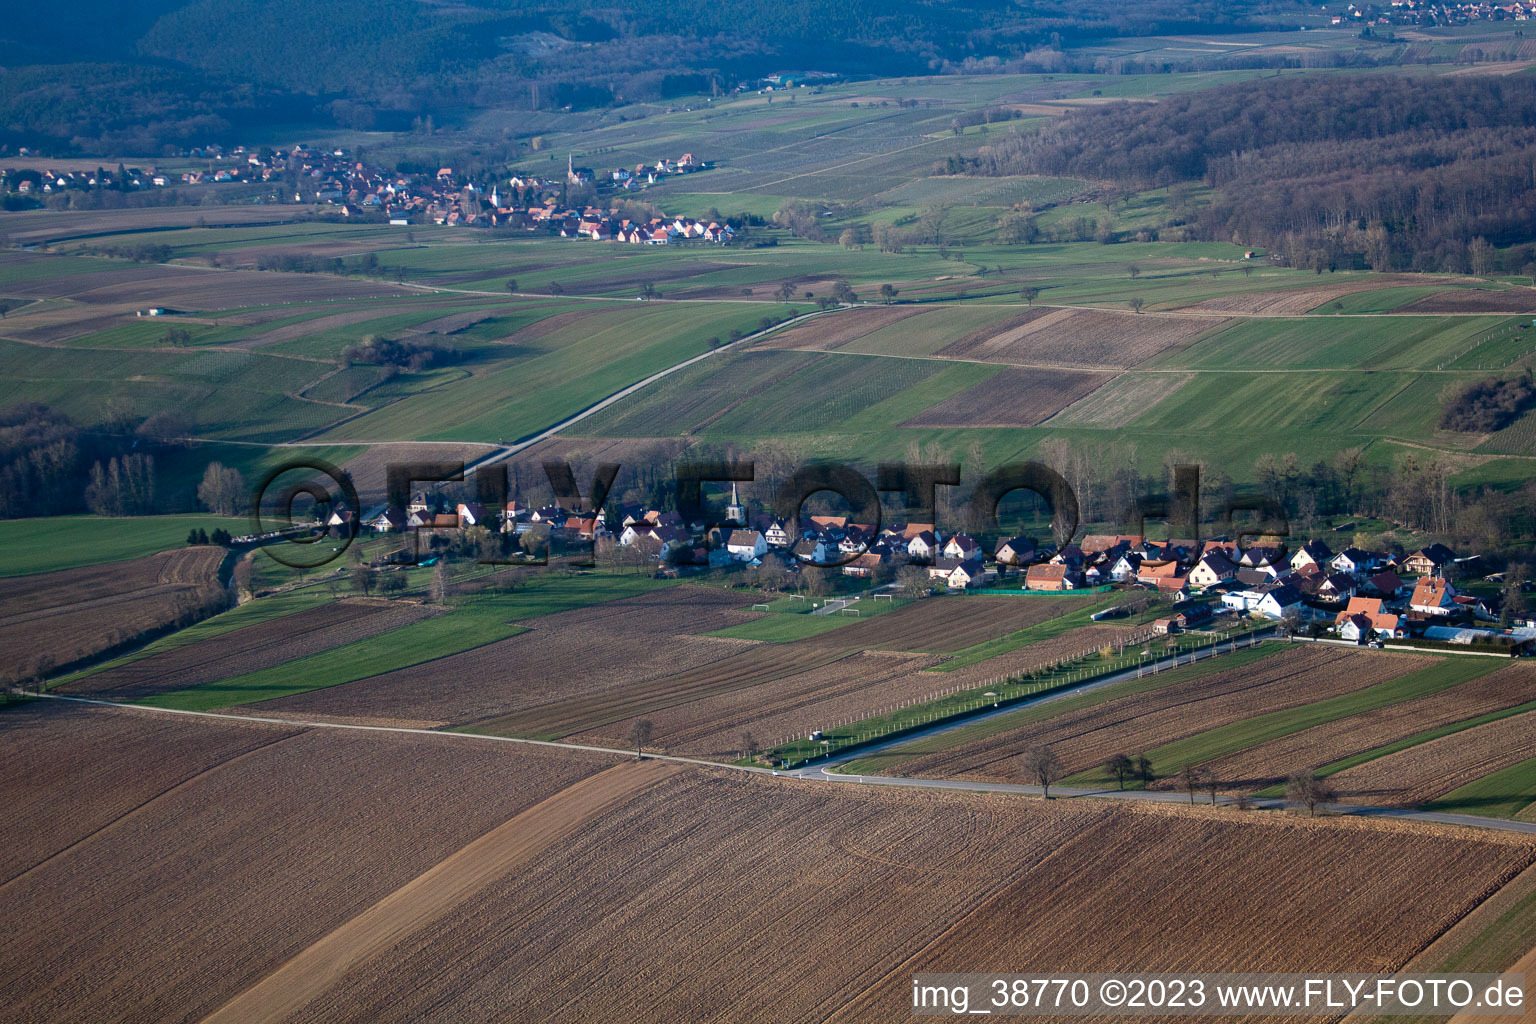 Bremmelbach in the state Bas-Rhin, France viewn from the air